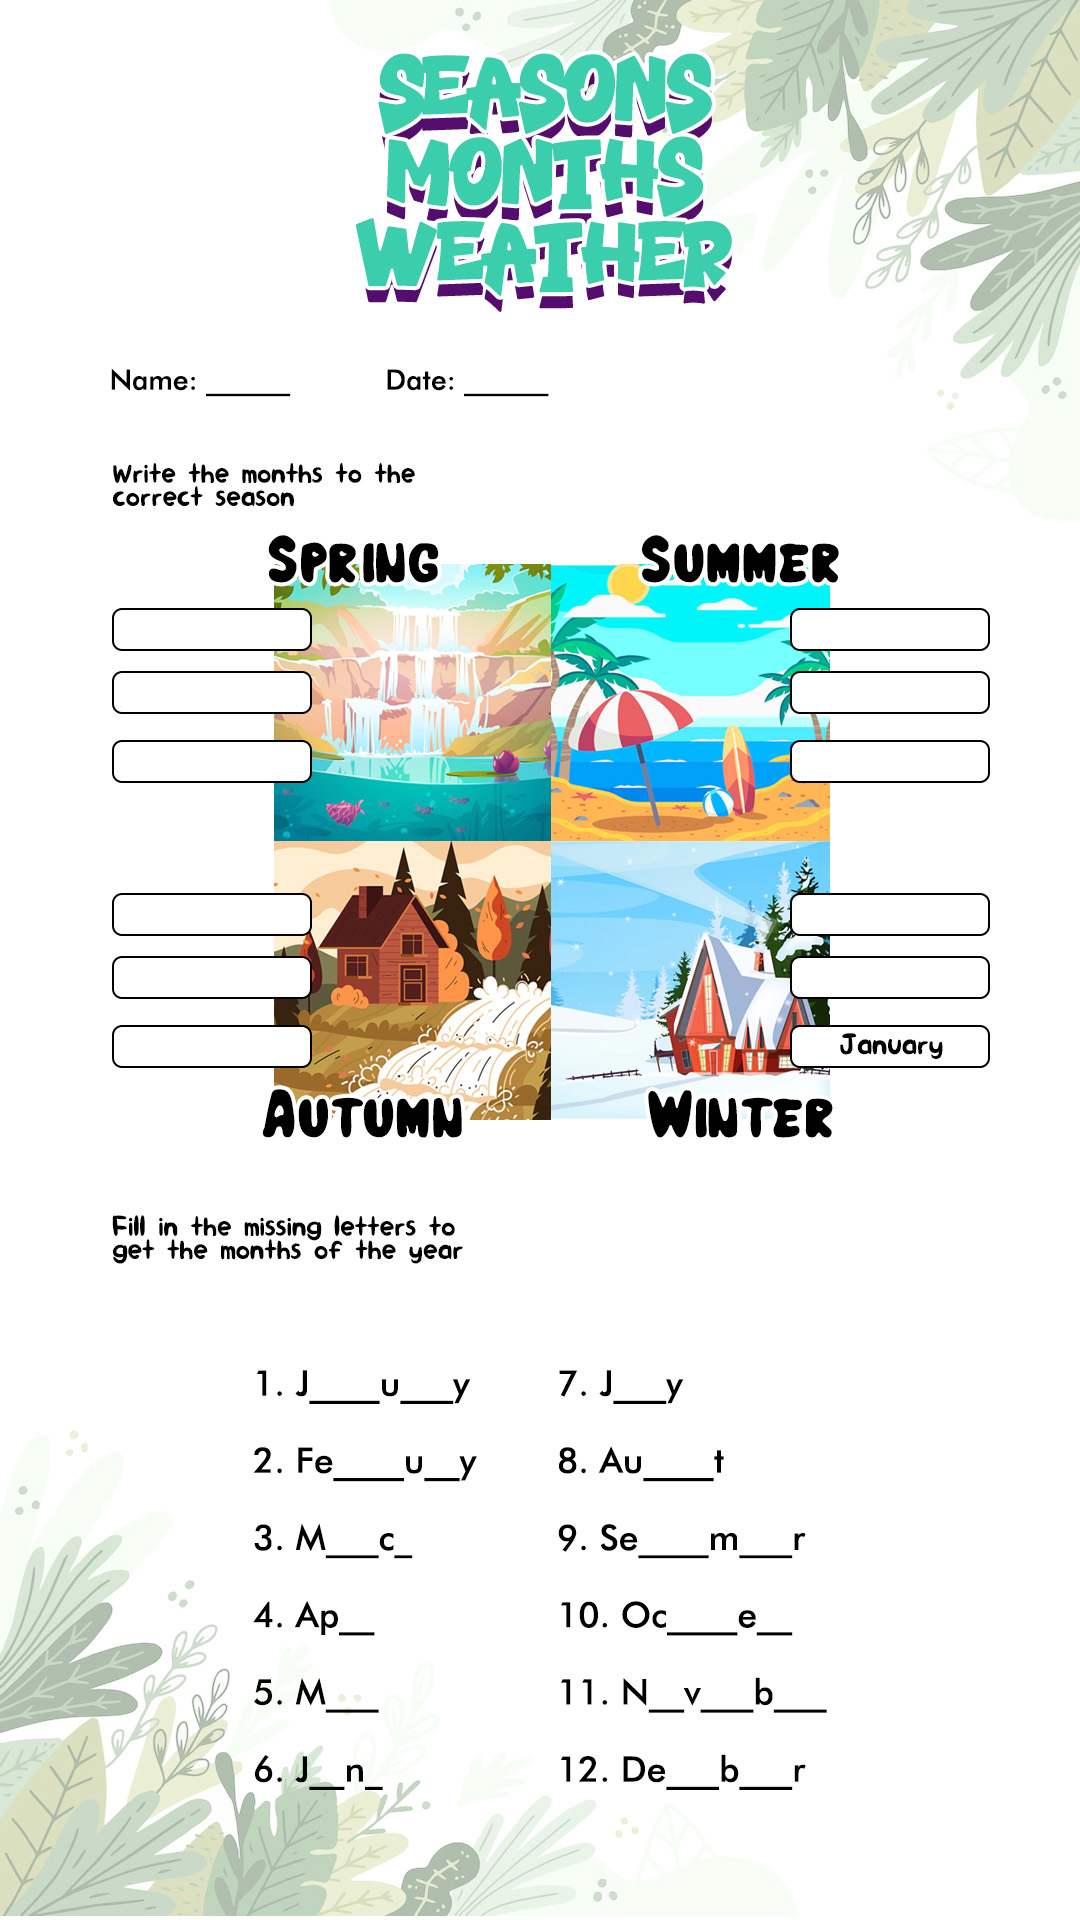 Months and Seasons Worksheet